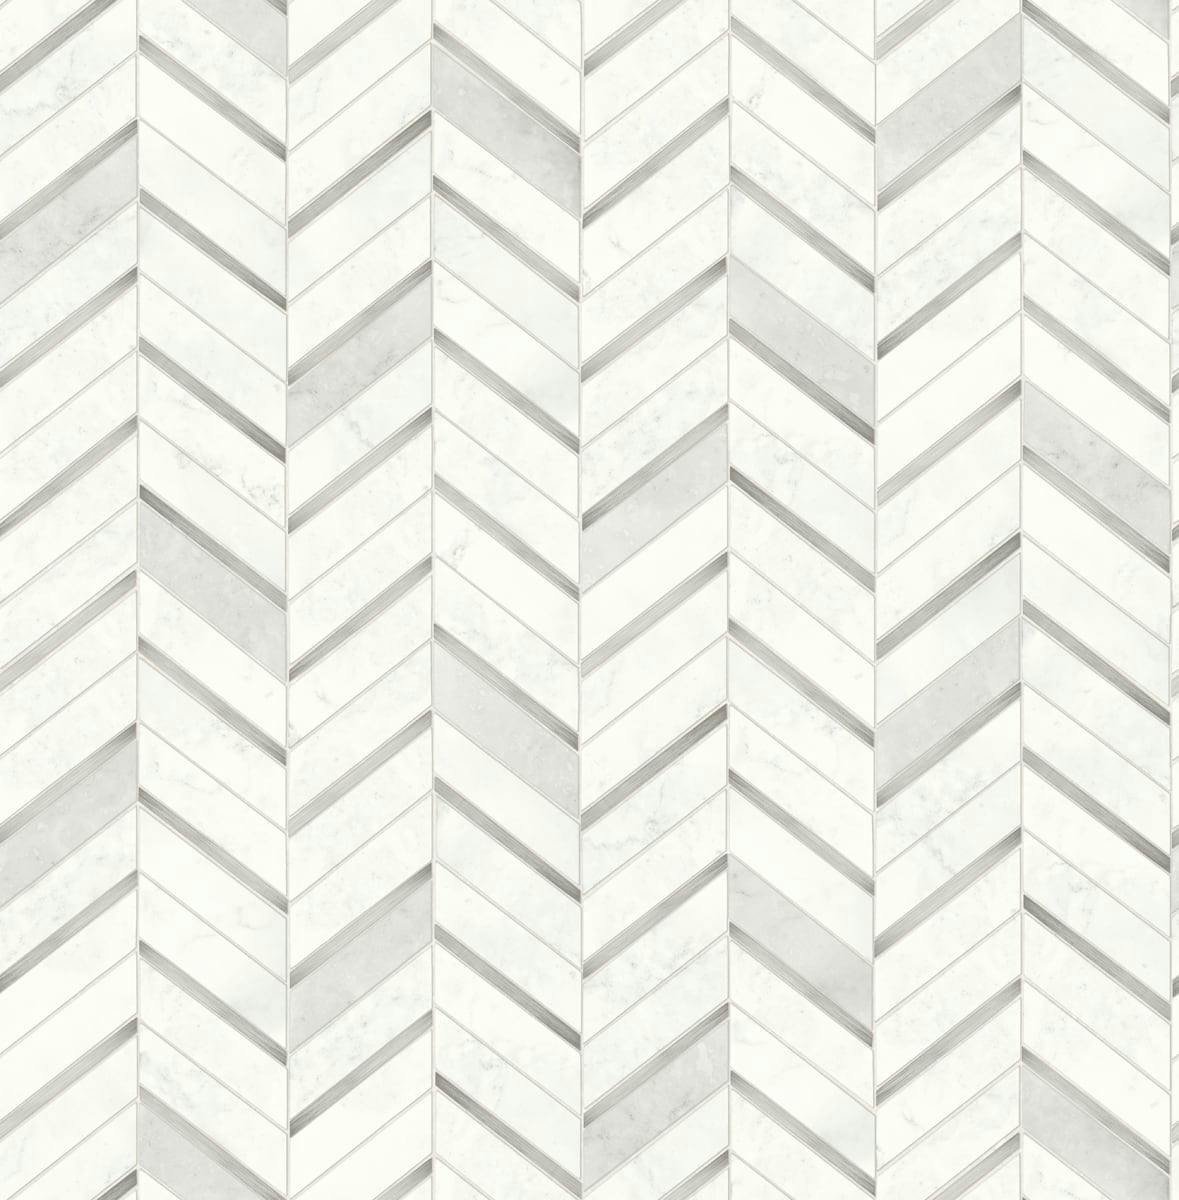 Chevron Marble Tile Peel and Stick Wallpaper in Metallic Silver & Pearl Gray